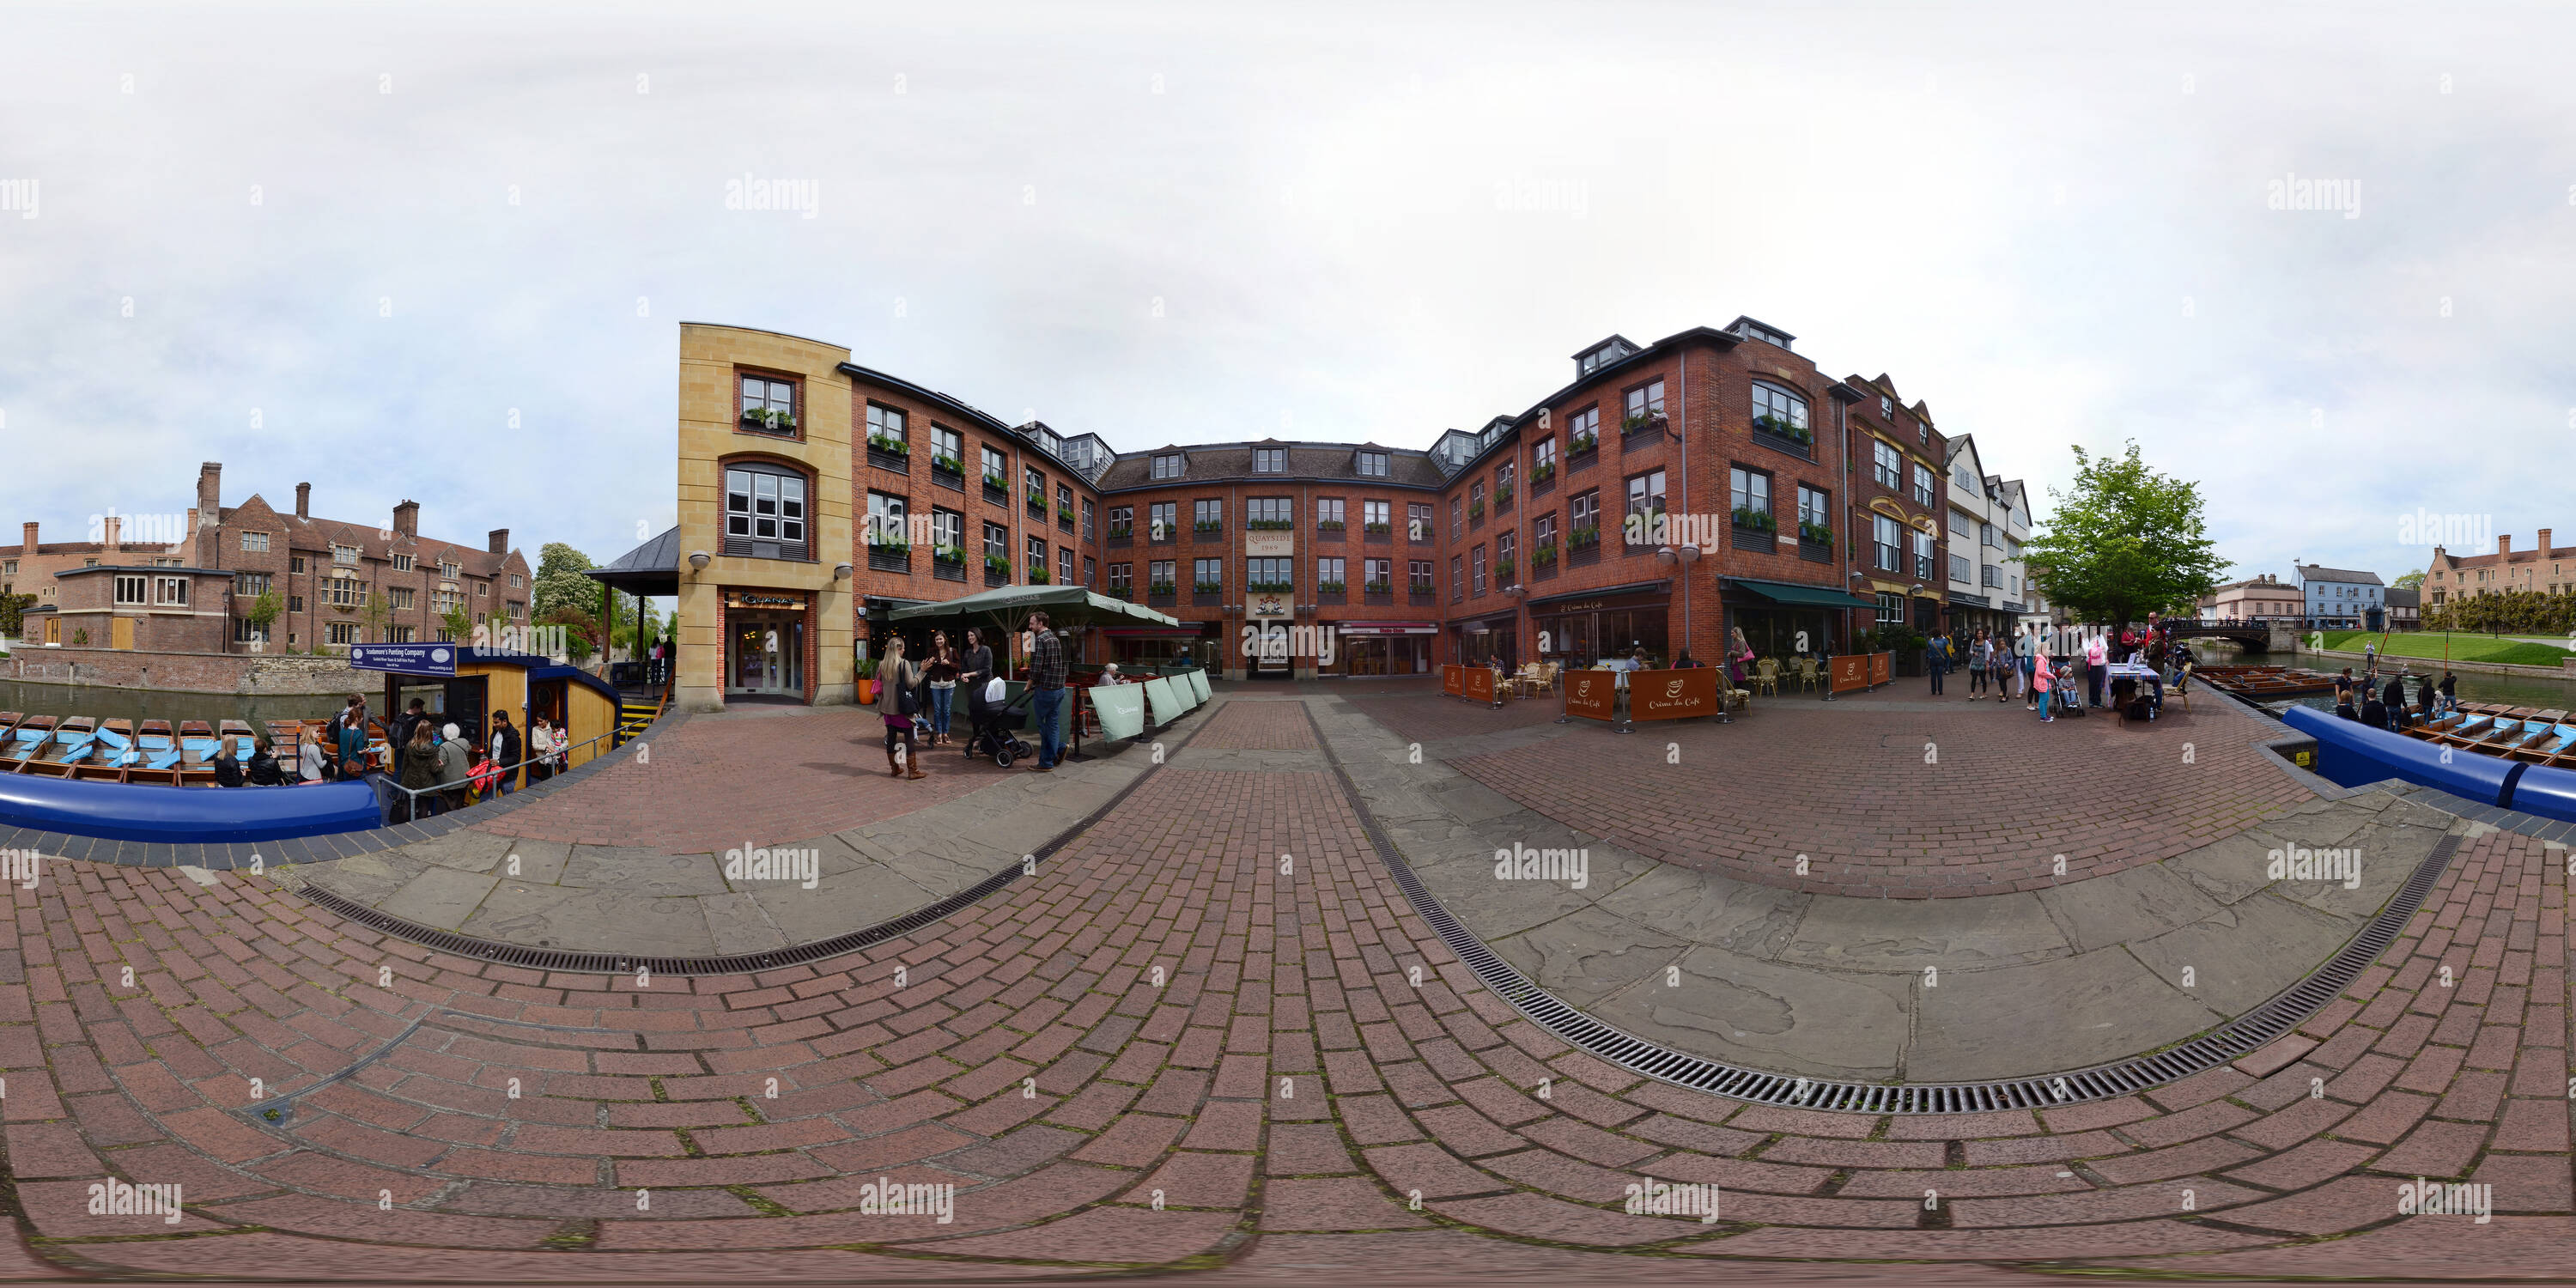 Vista panorámica en 360 grados de Quayside Square, Cambridge, Reino Unido.